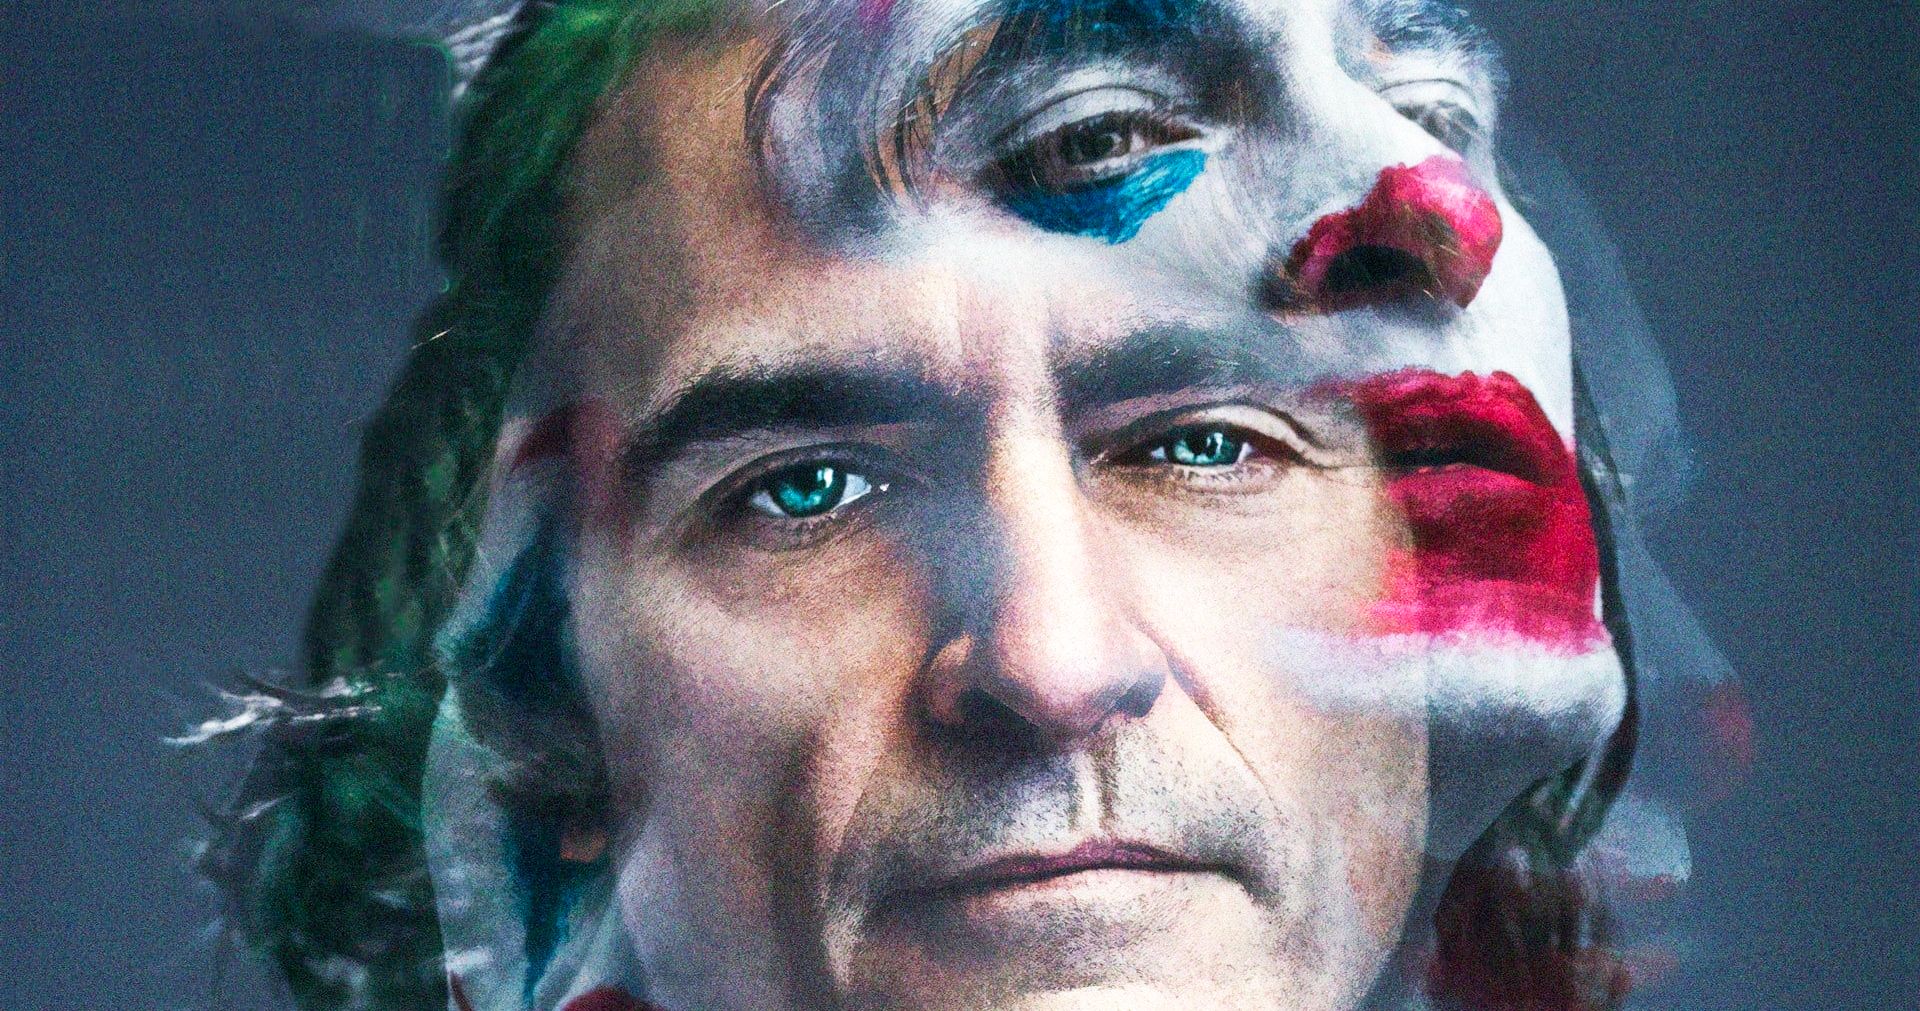 Joker Director Reveals Talks with Joaquin Phoenix Over a Possible Sequel